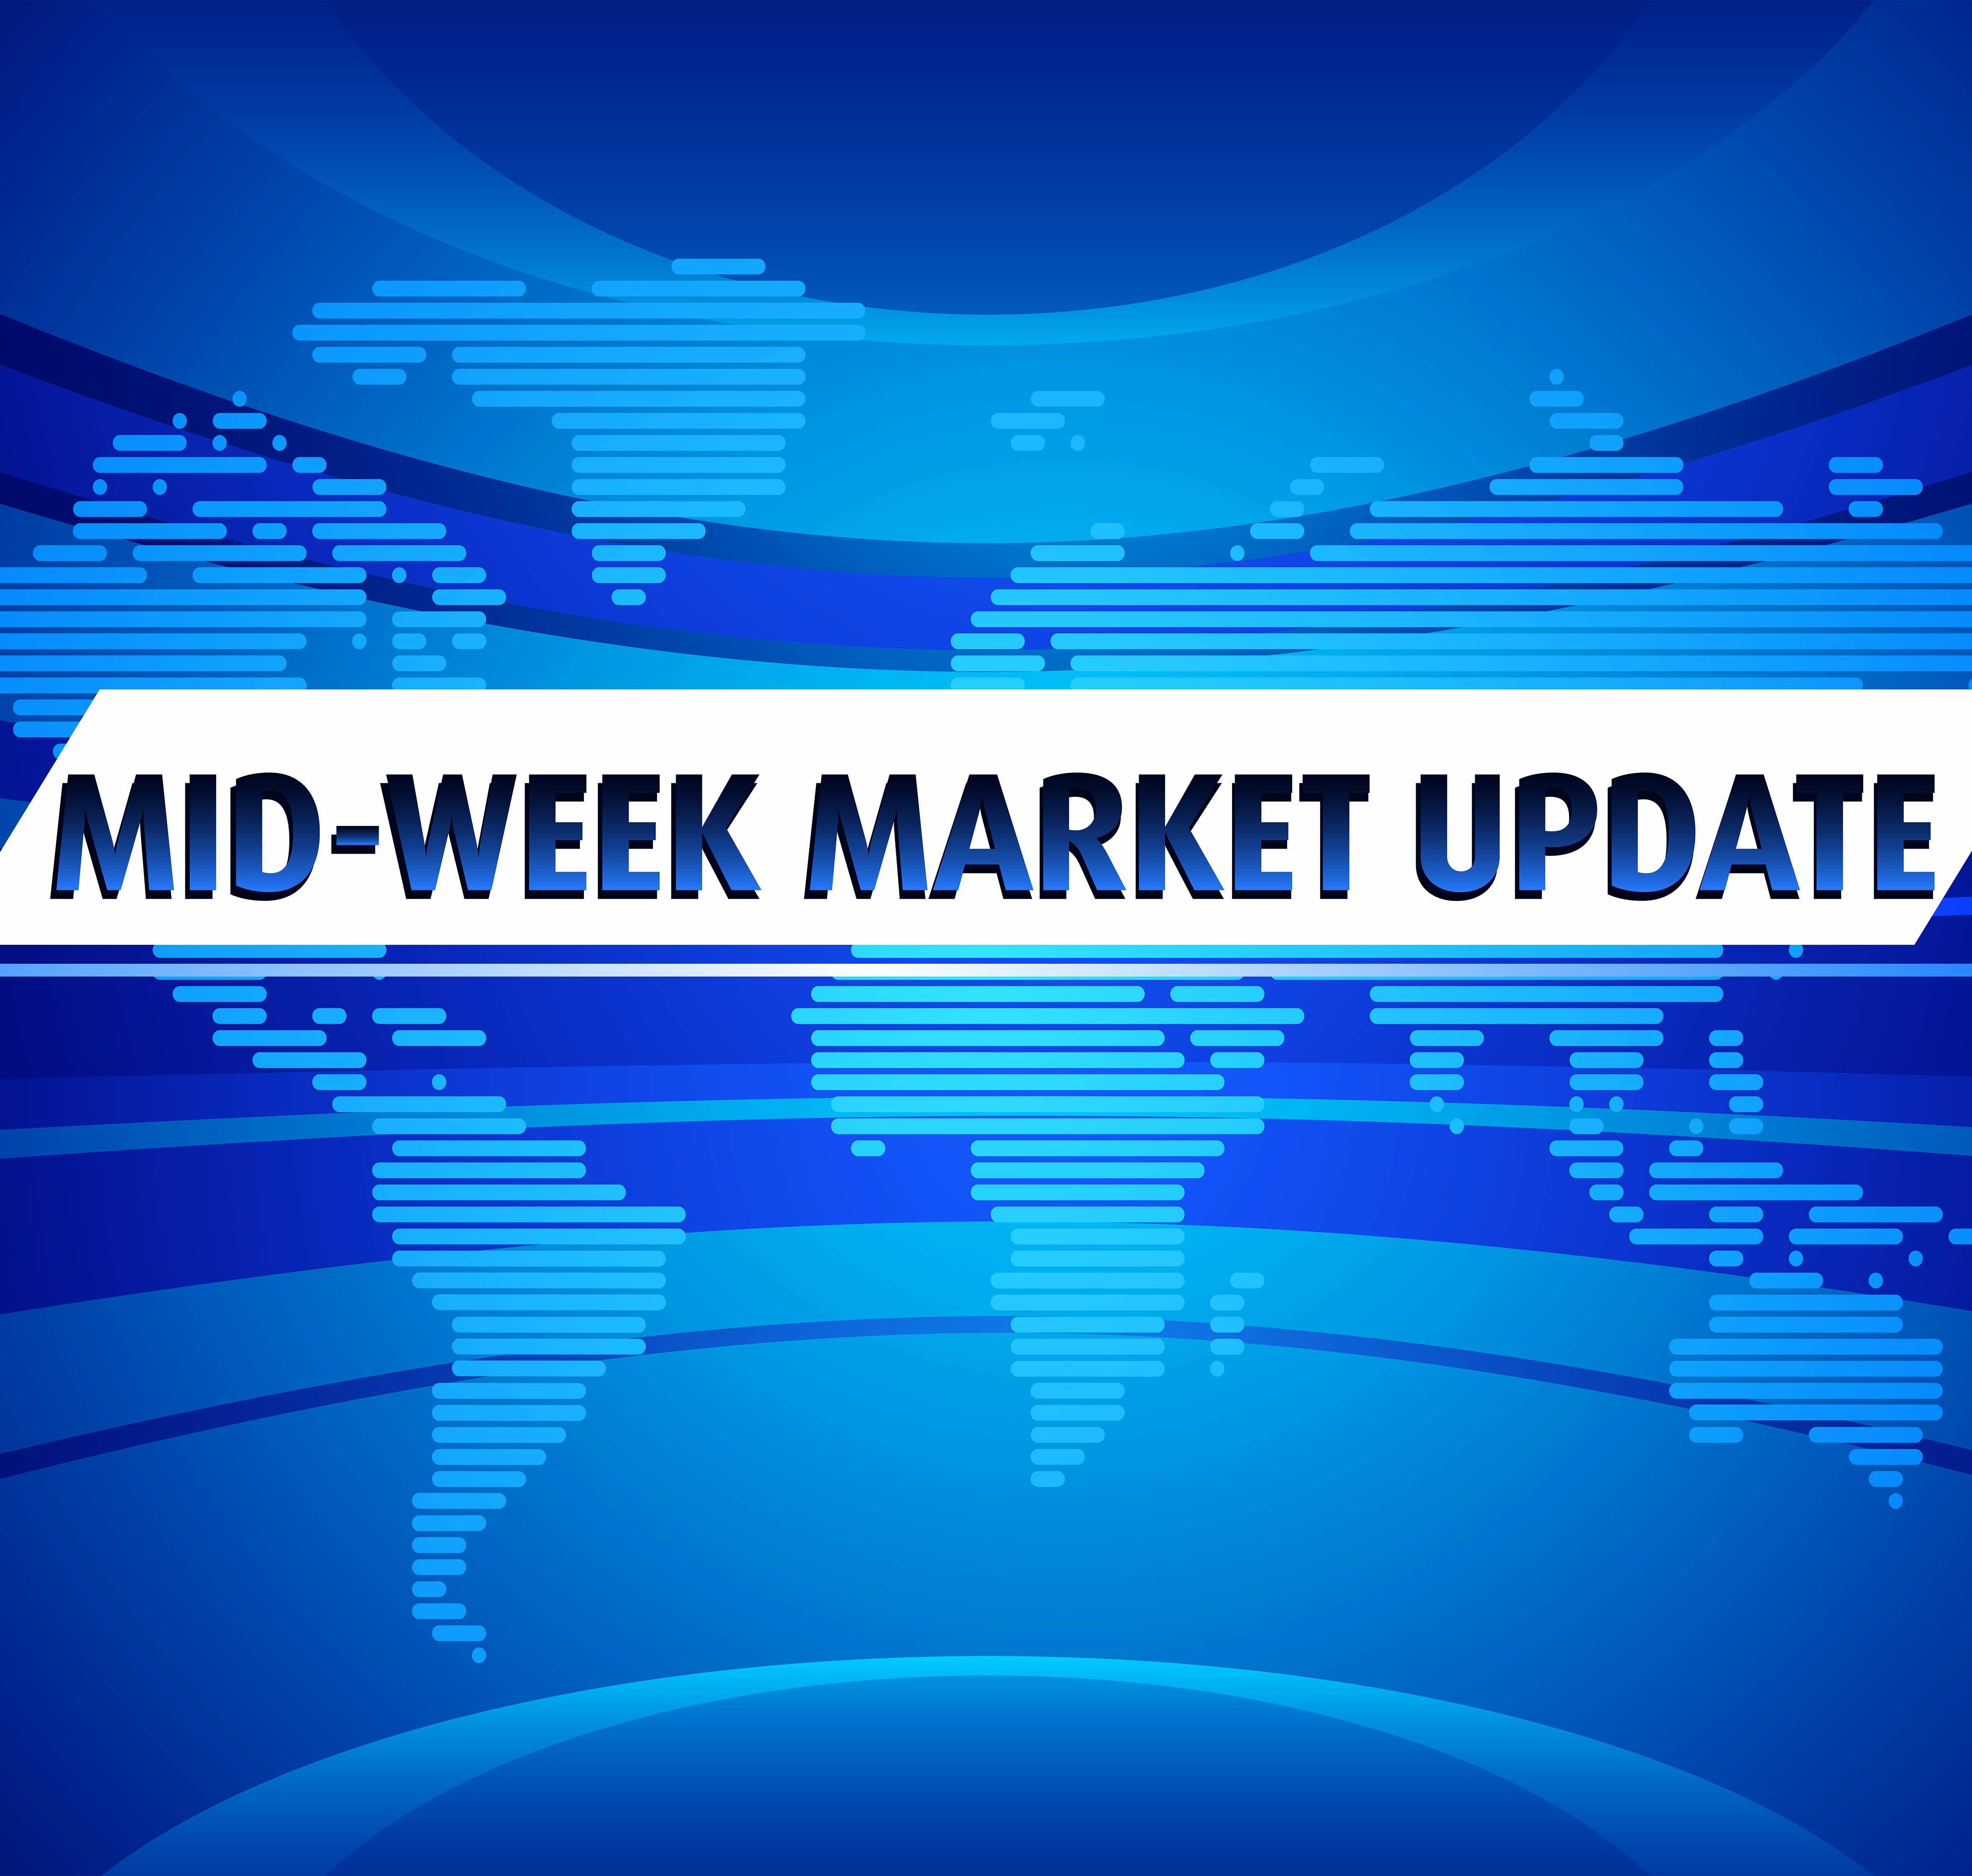 Midweek Market Update